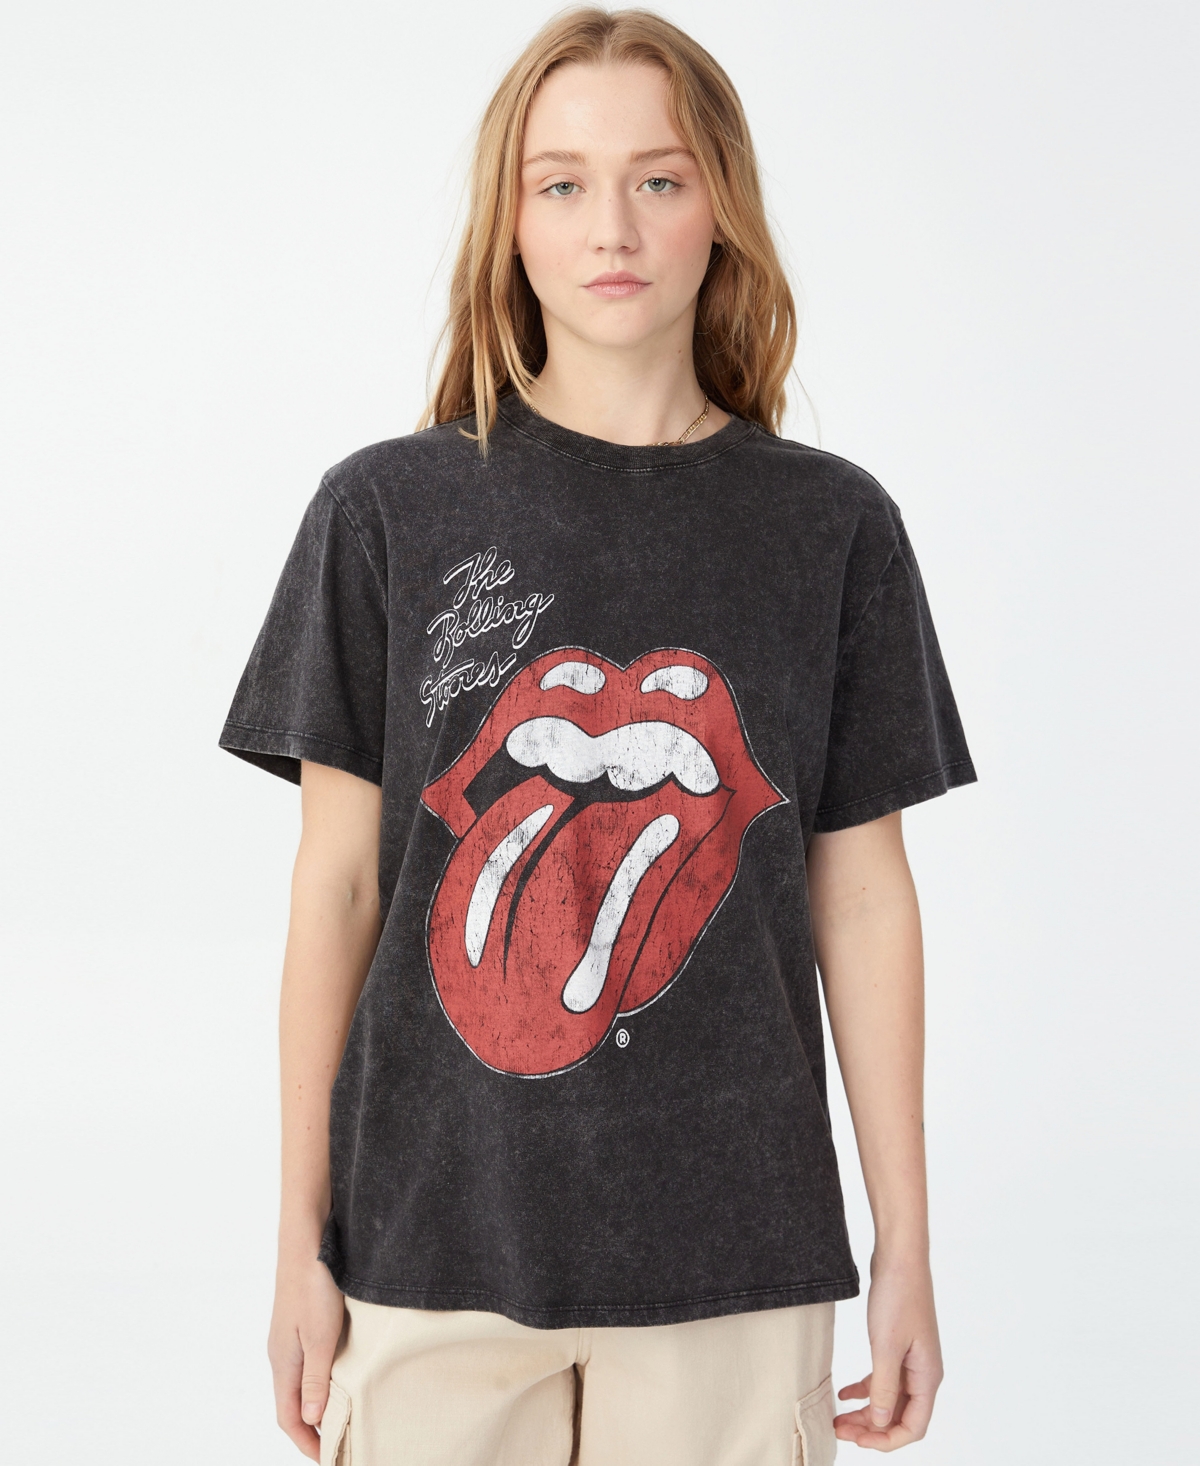 Cotton On Women's Rolling Stones T-Shirt